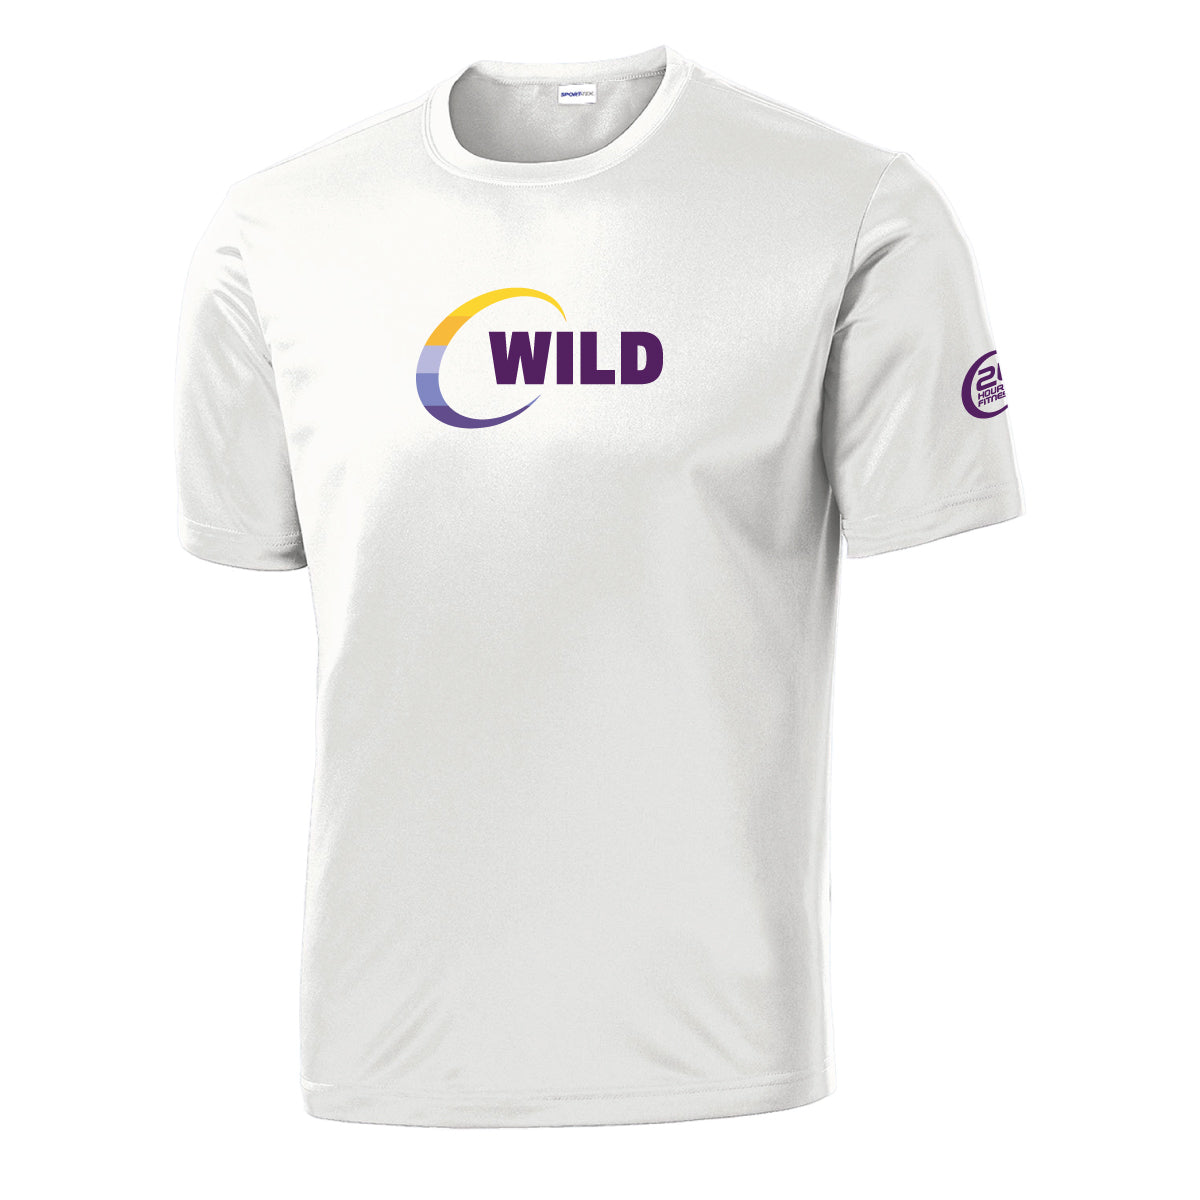 WILD Unisex Performance T-Shirt